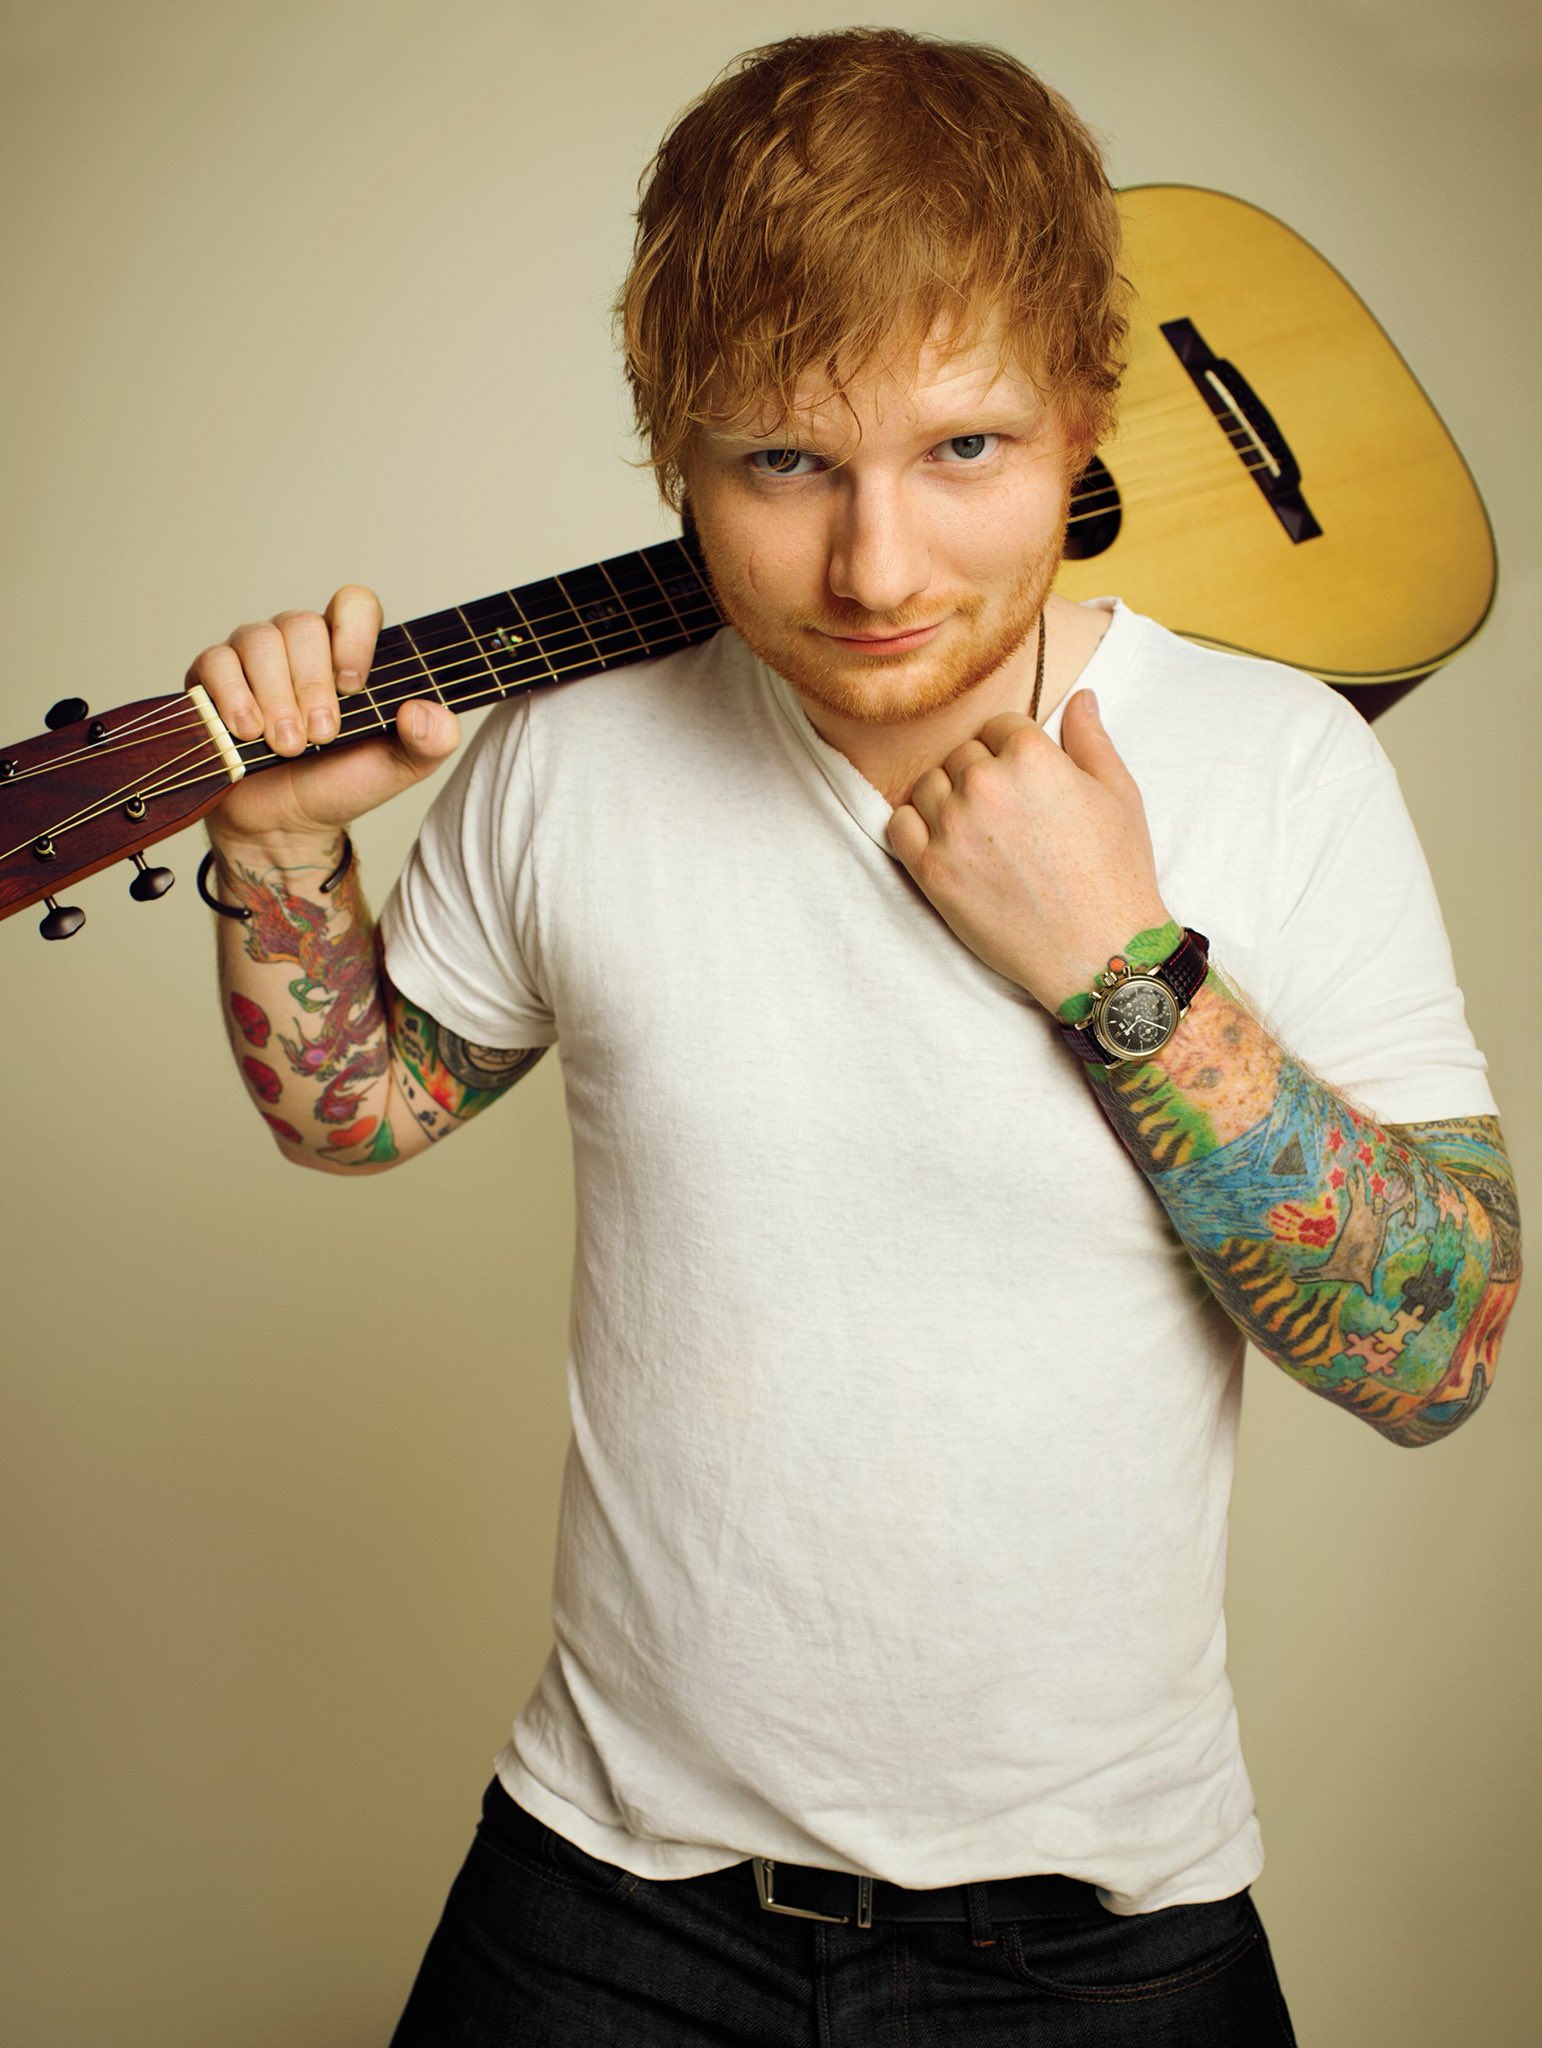 Jaki Kolor Oczu Ma Ed Sheeran Ed Sheeran - Wzrost – Waga – Wymiary – Kolor oczu – Biografia